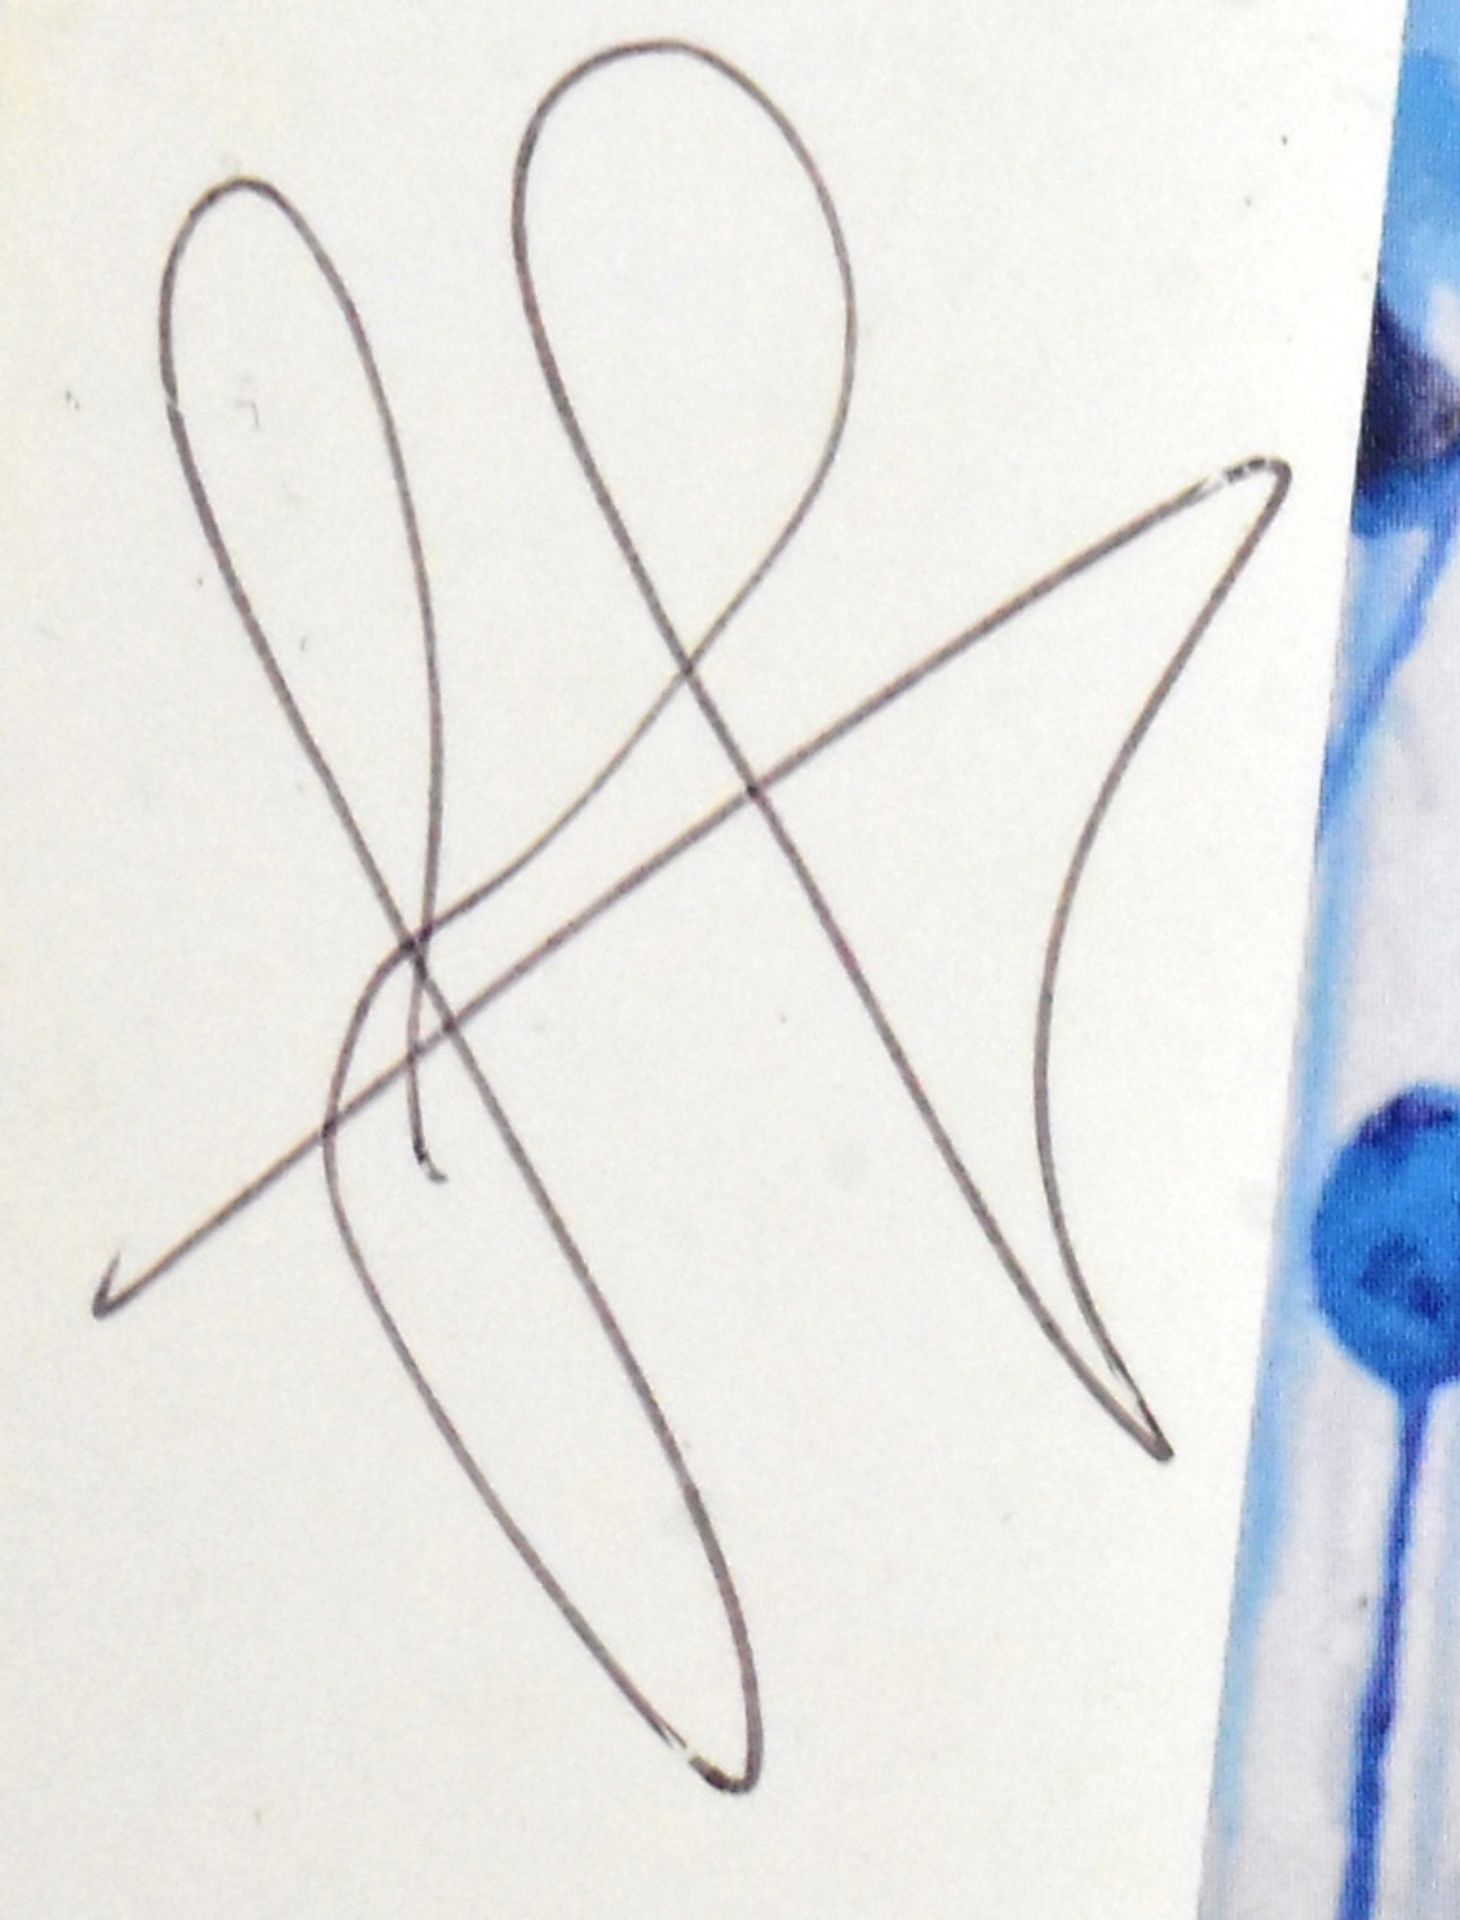 RADIOHEAD - KID A - FULL BAND SIGNED ARTWORK PRINT - Image 3 of 5